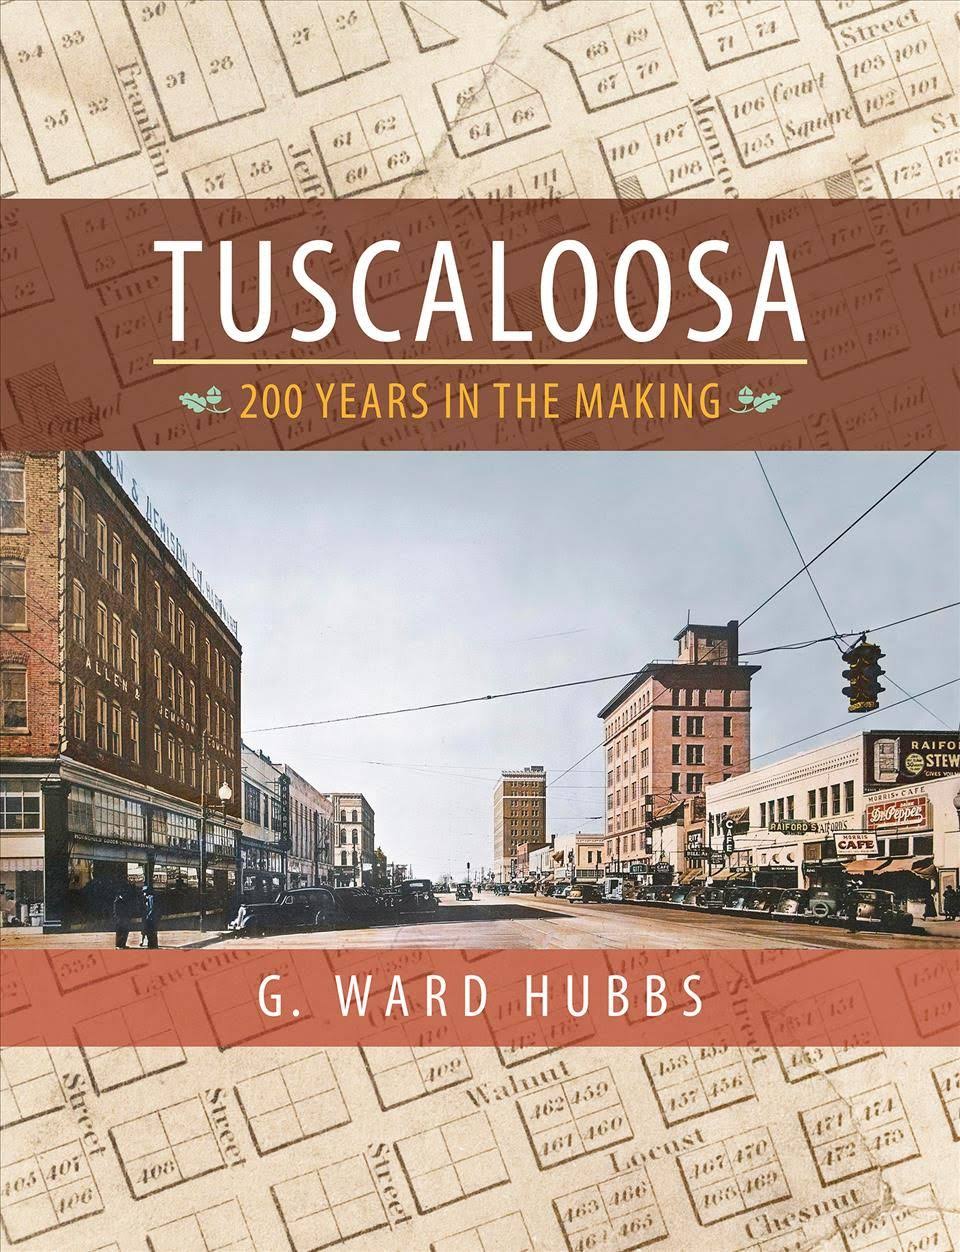 Tuscaloosa: 200 Years in the Making [Book]